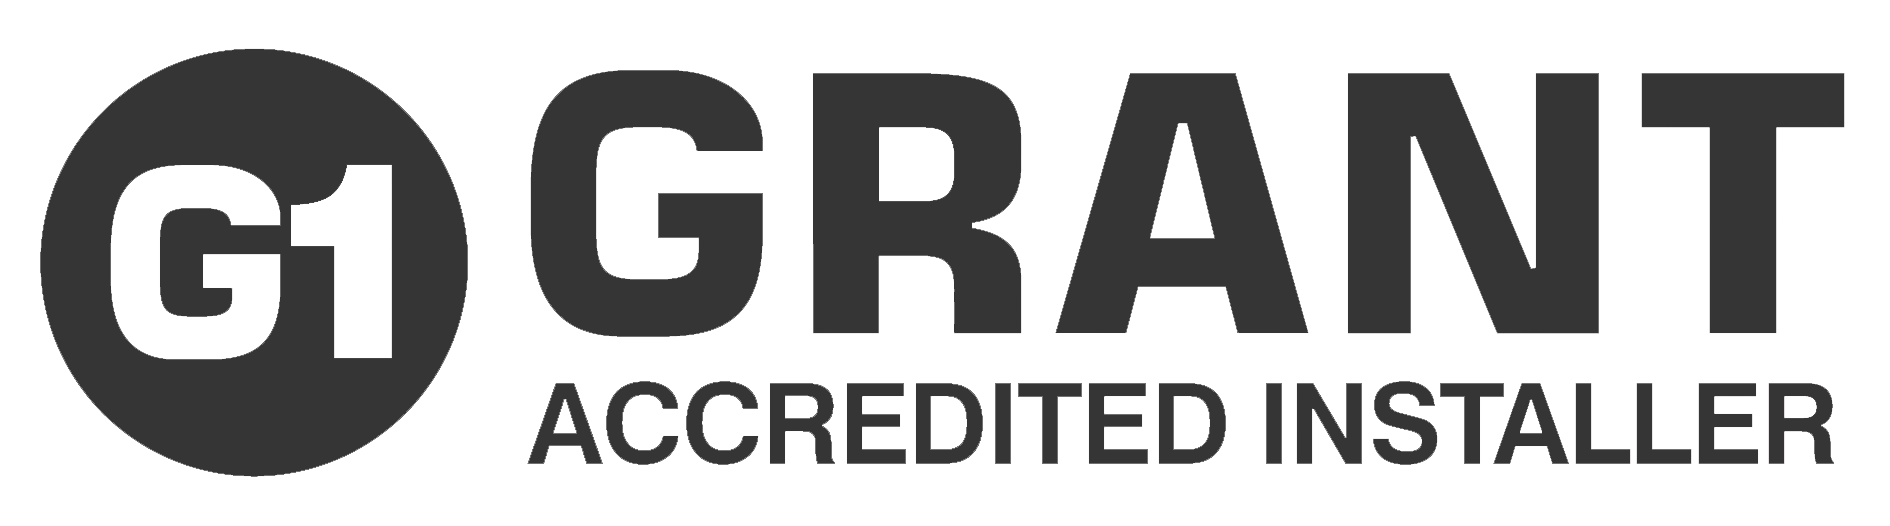 Oakhill Plumbing & Heating - Grant Accredited